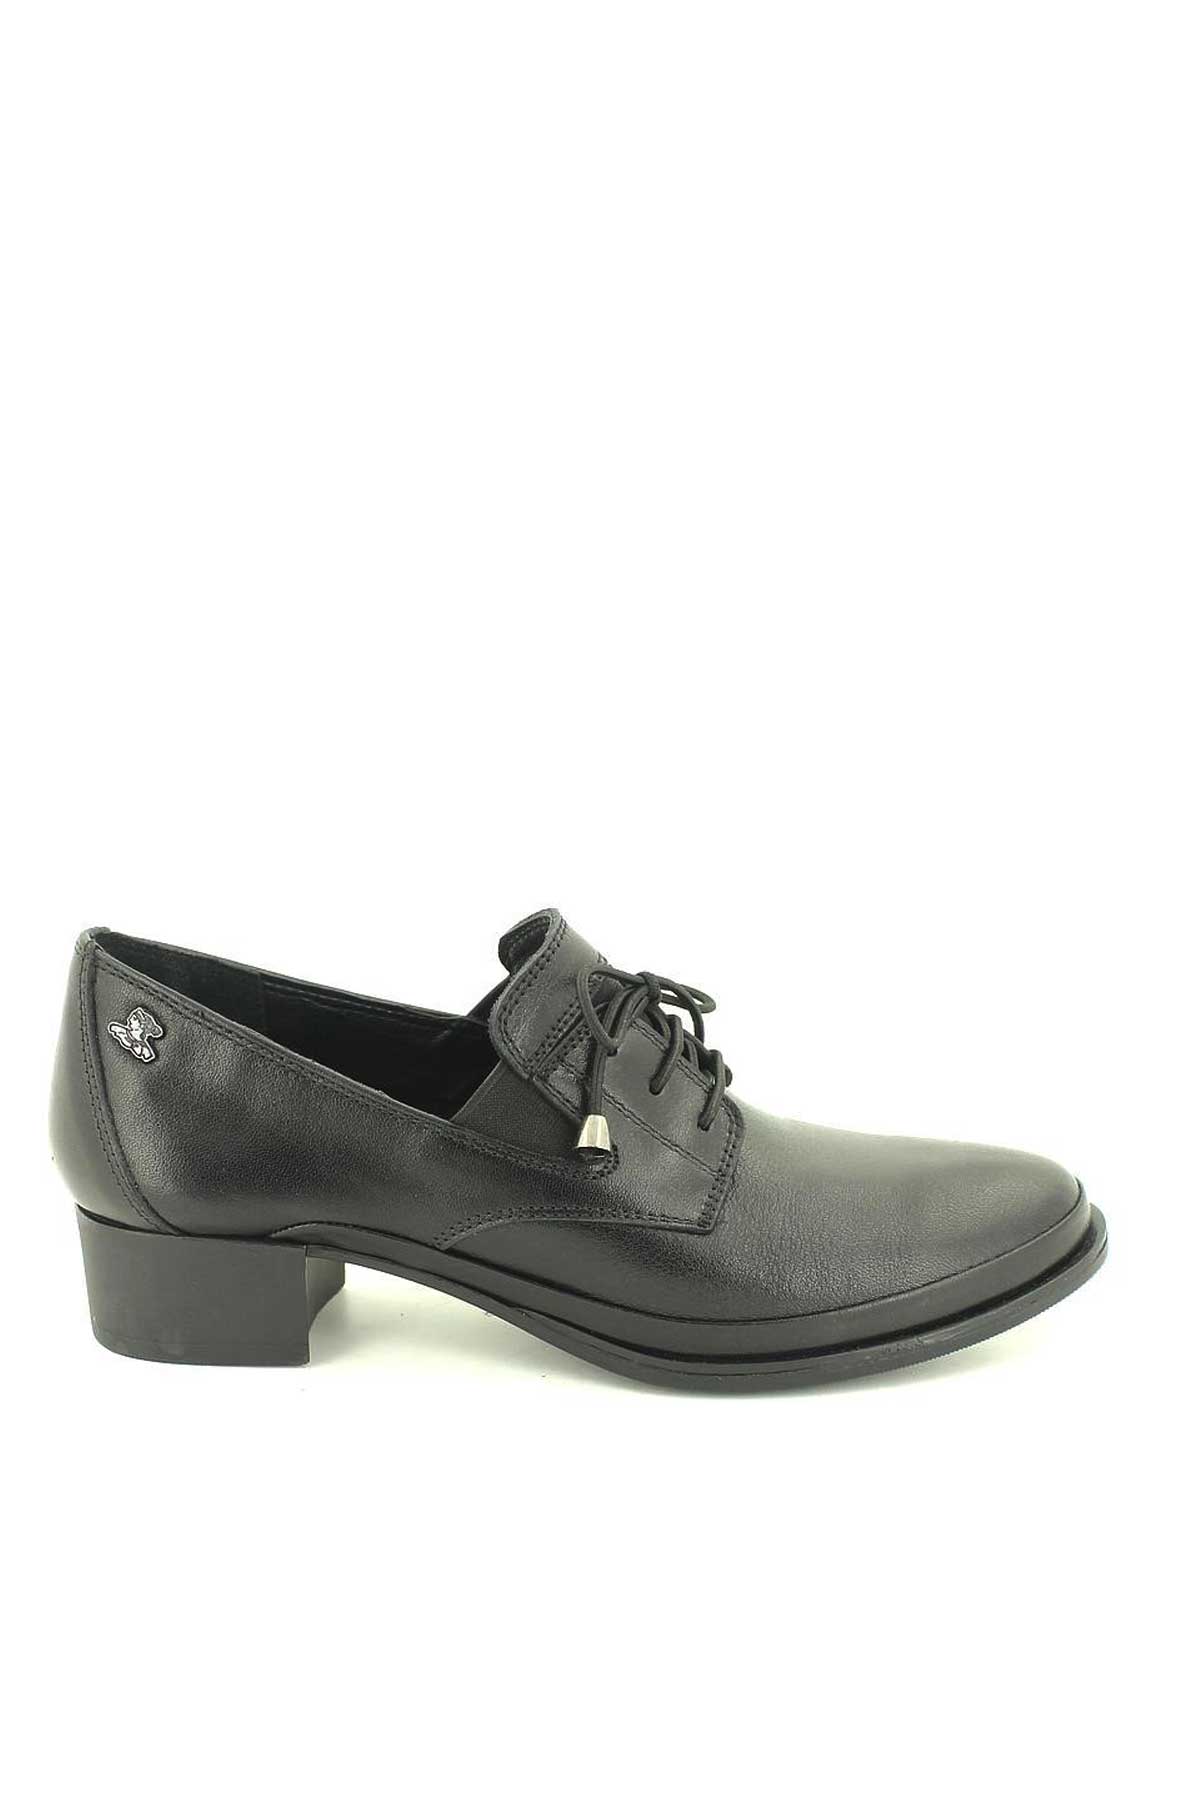 Kadın Topuklu Deri Ayakkabı Siyah 1709201K - Thumbnail